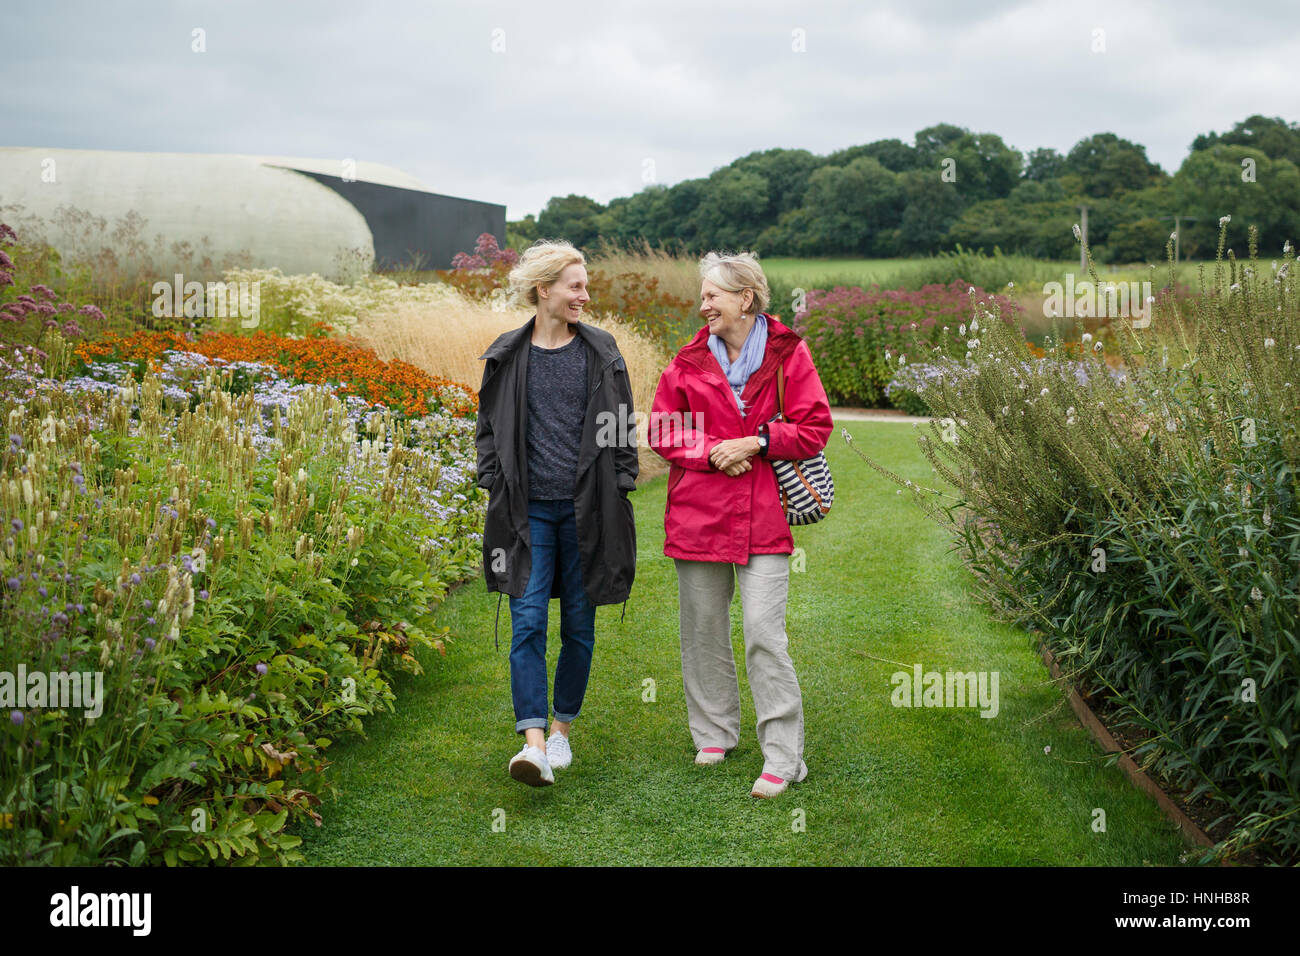 2 women walking around a garden Stock Photo